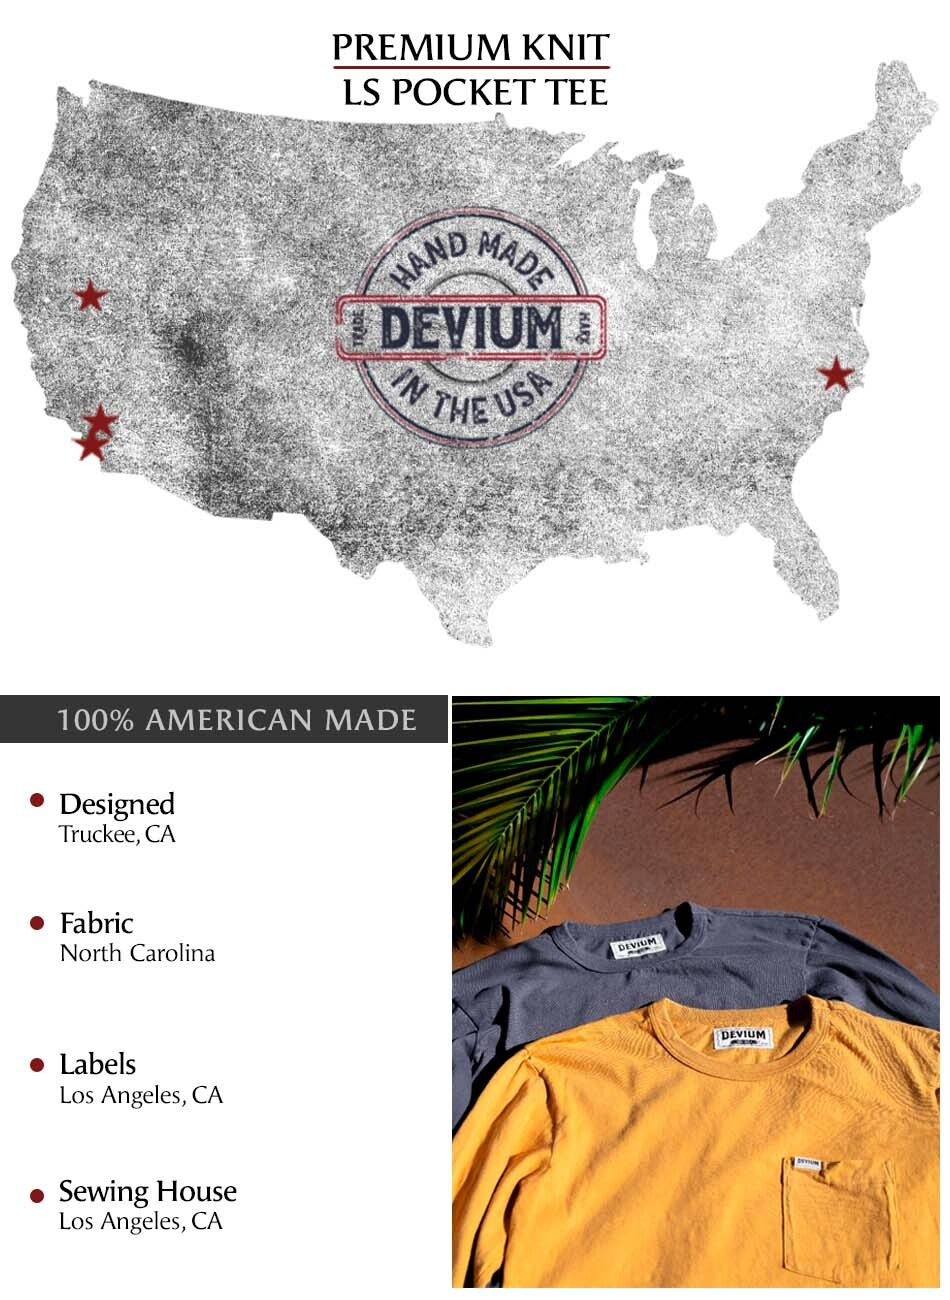 Devium Premium Knit Long Sleeve Pocket Tee